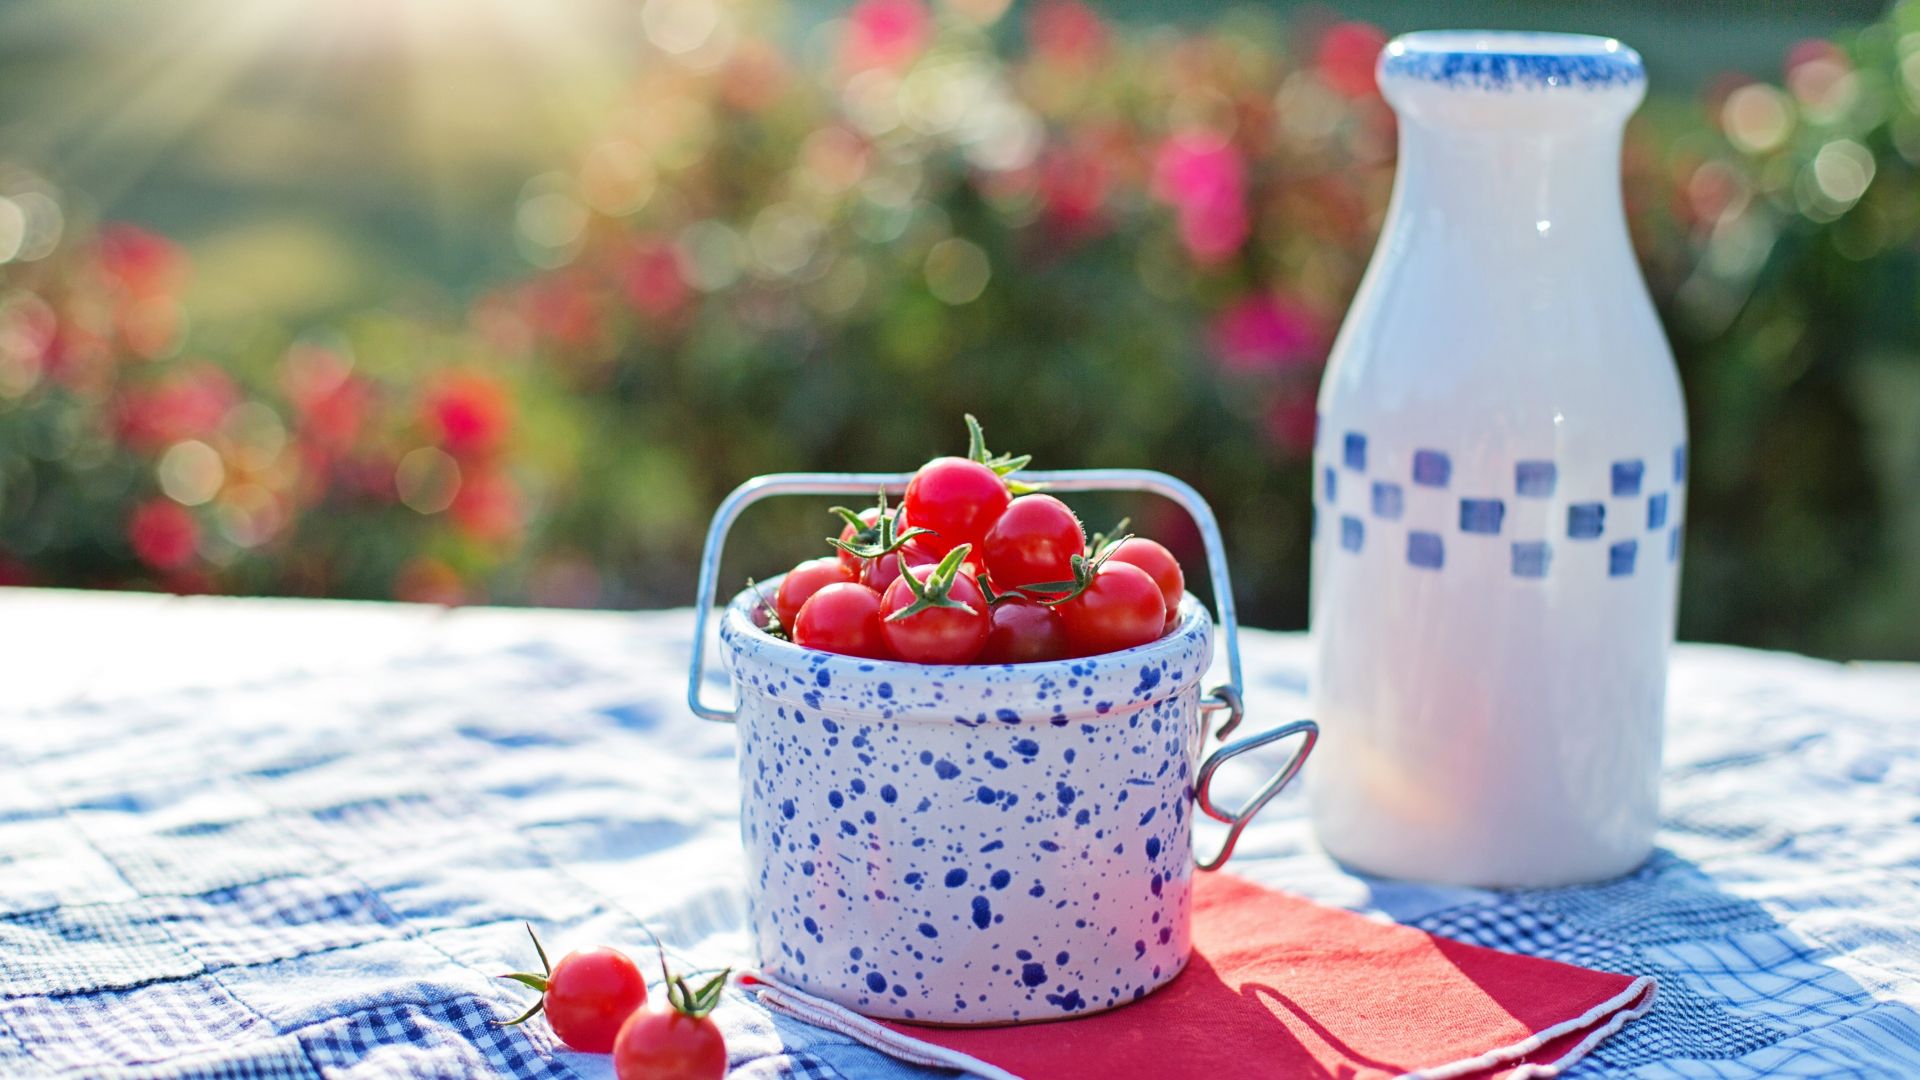 Wallpaper Cherry, tomatoes, dinning table, basket, 4k